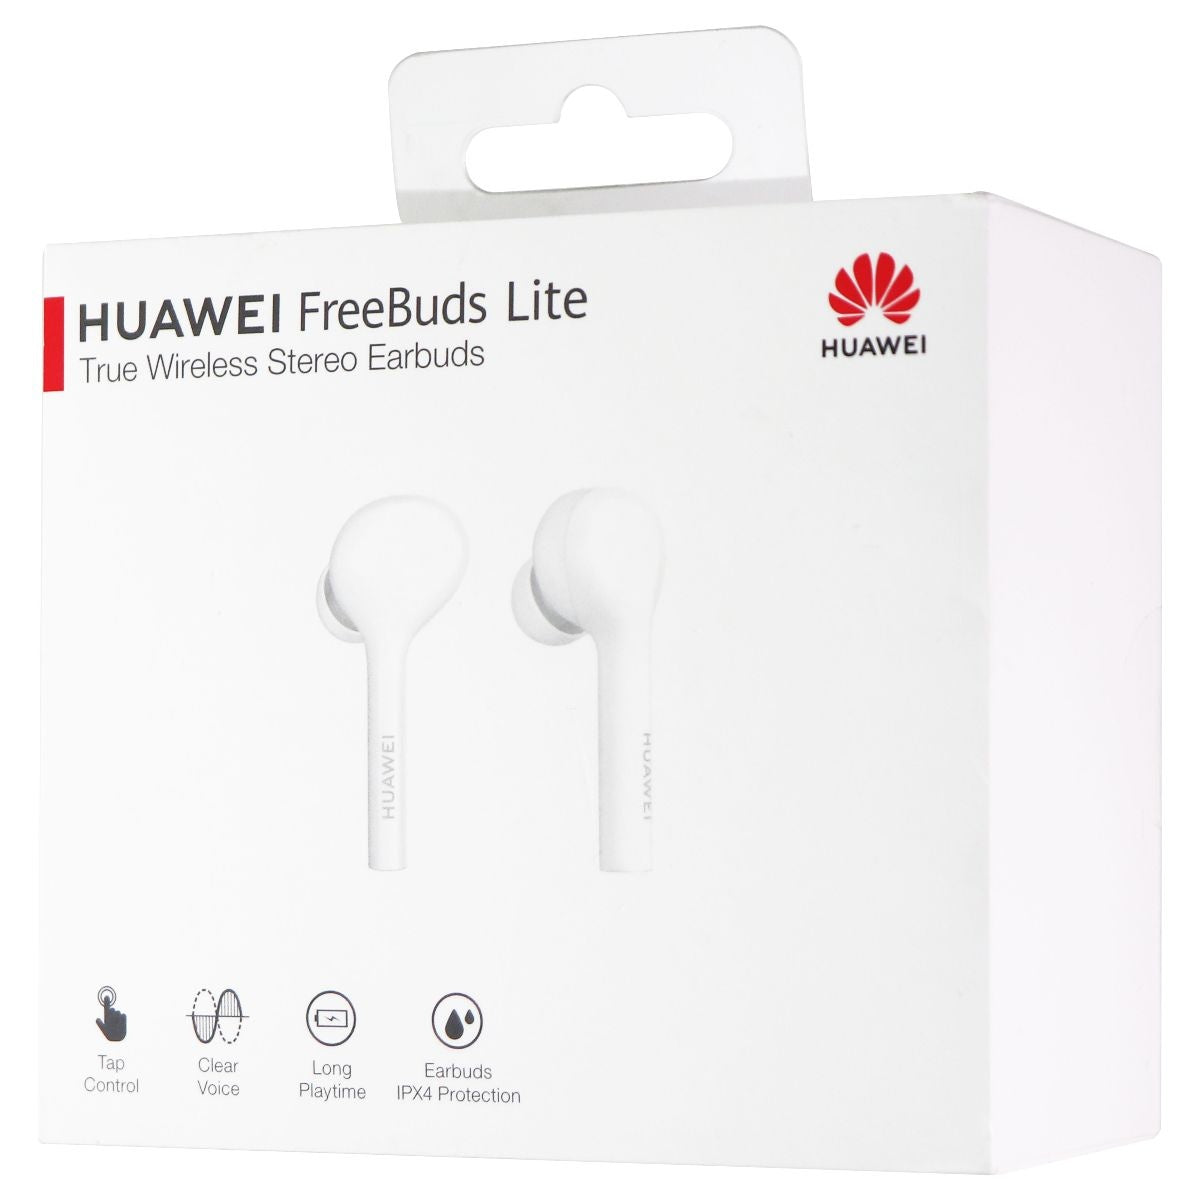 Huawei Freebuds Lite